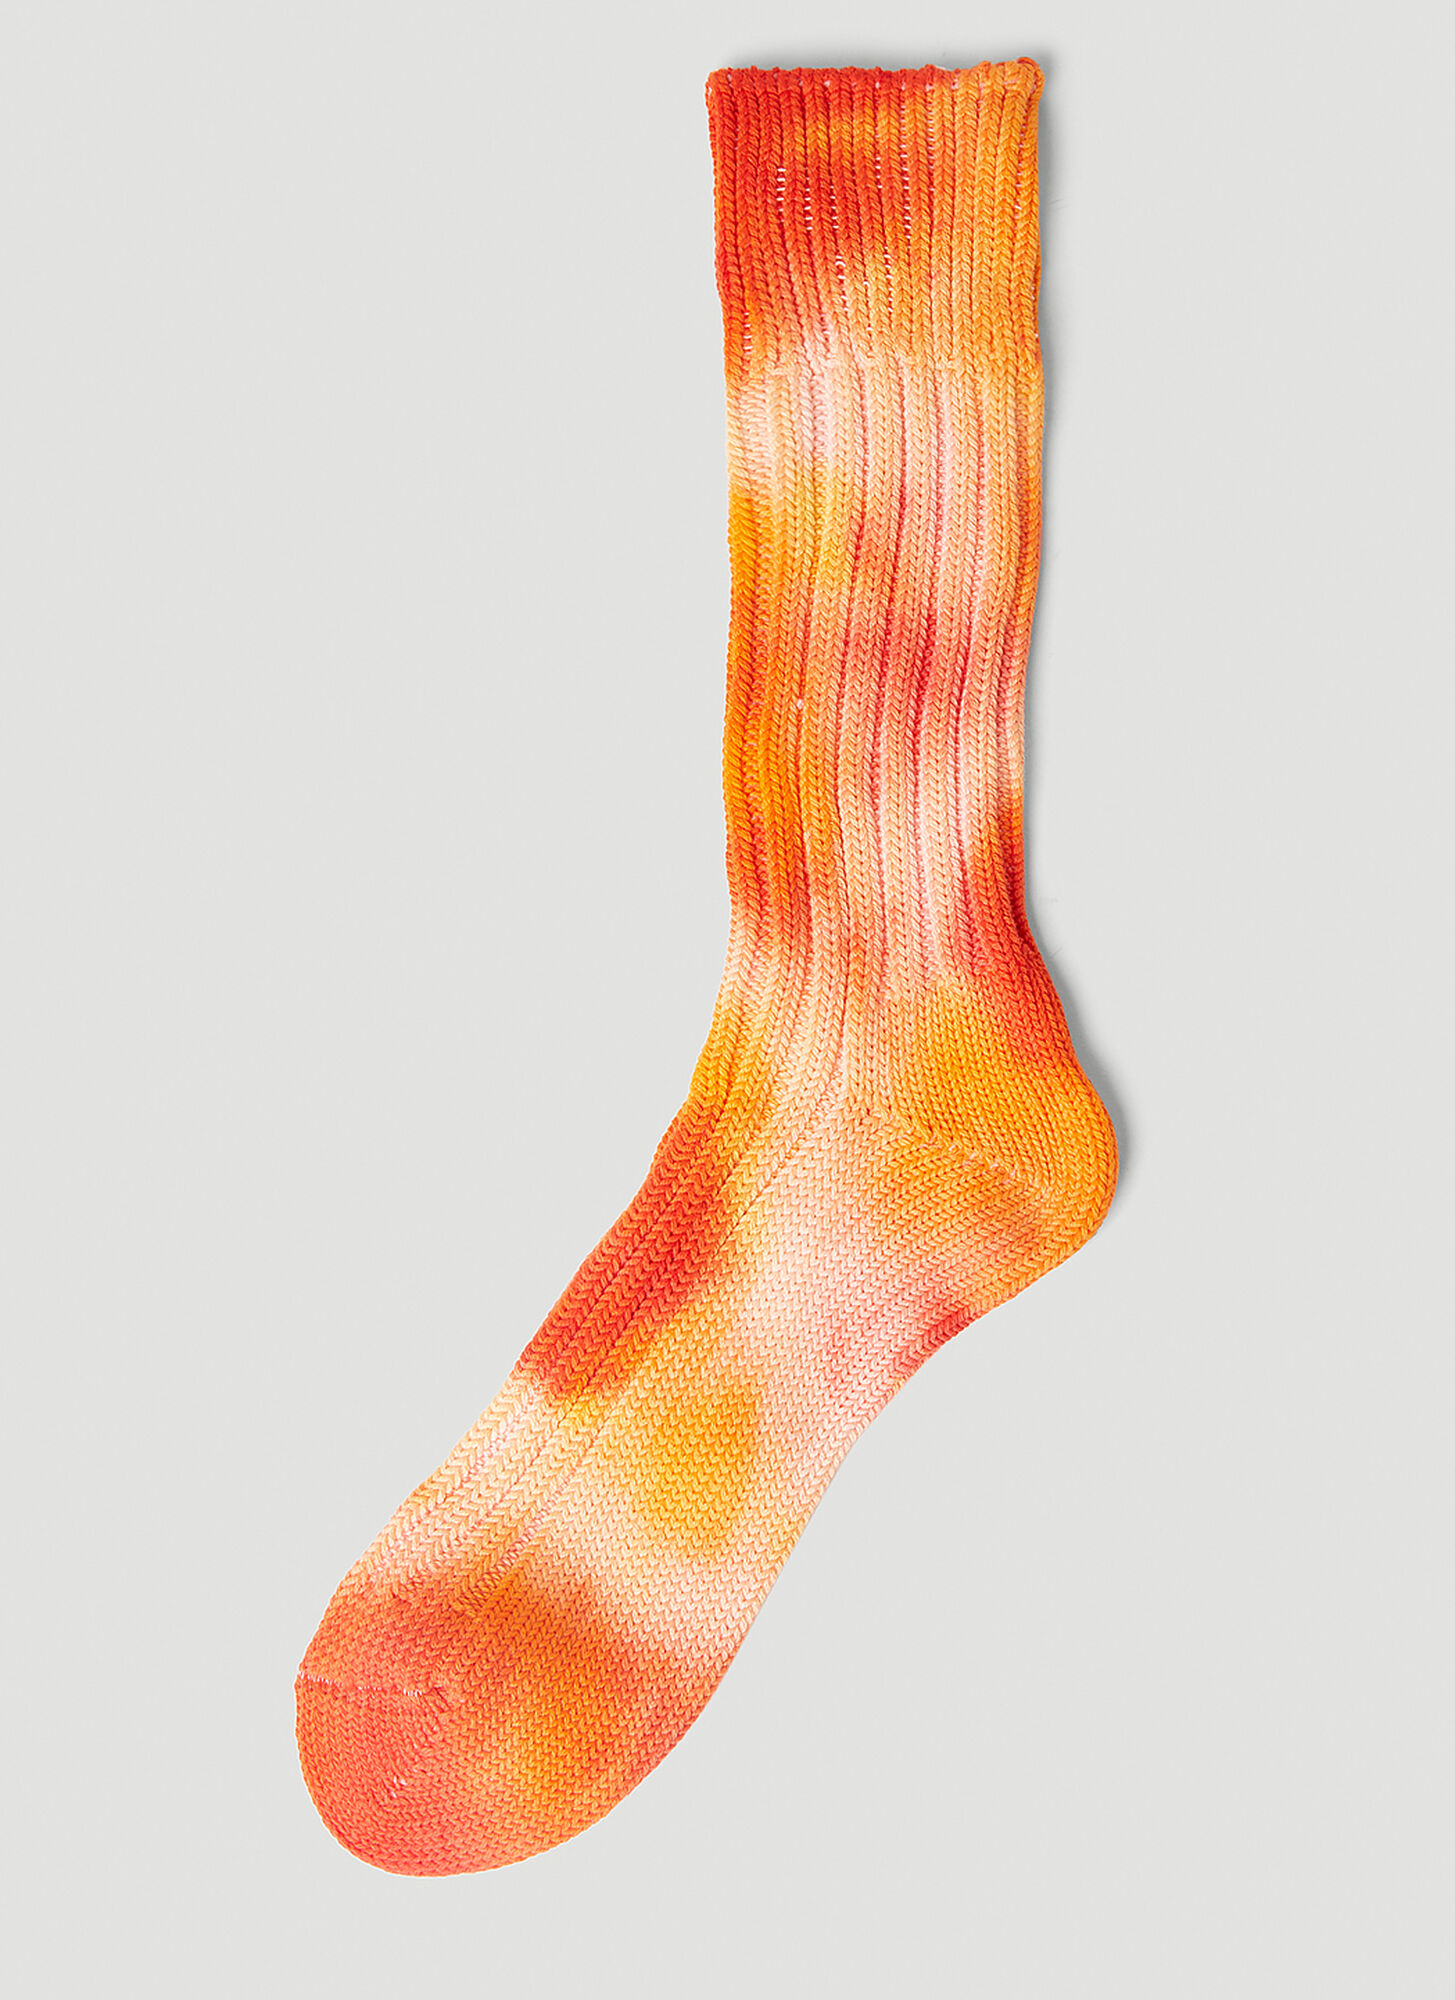 Stain Shade X Decka Socks Tie Dye Socks Unisex Orange